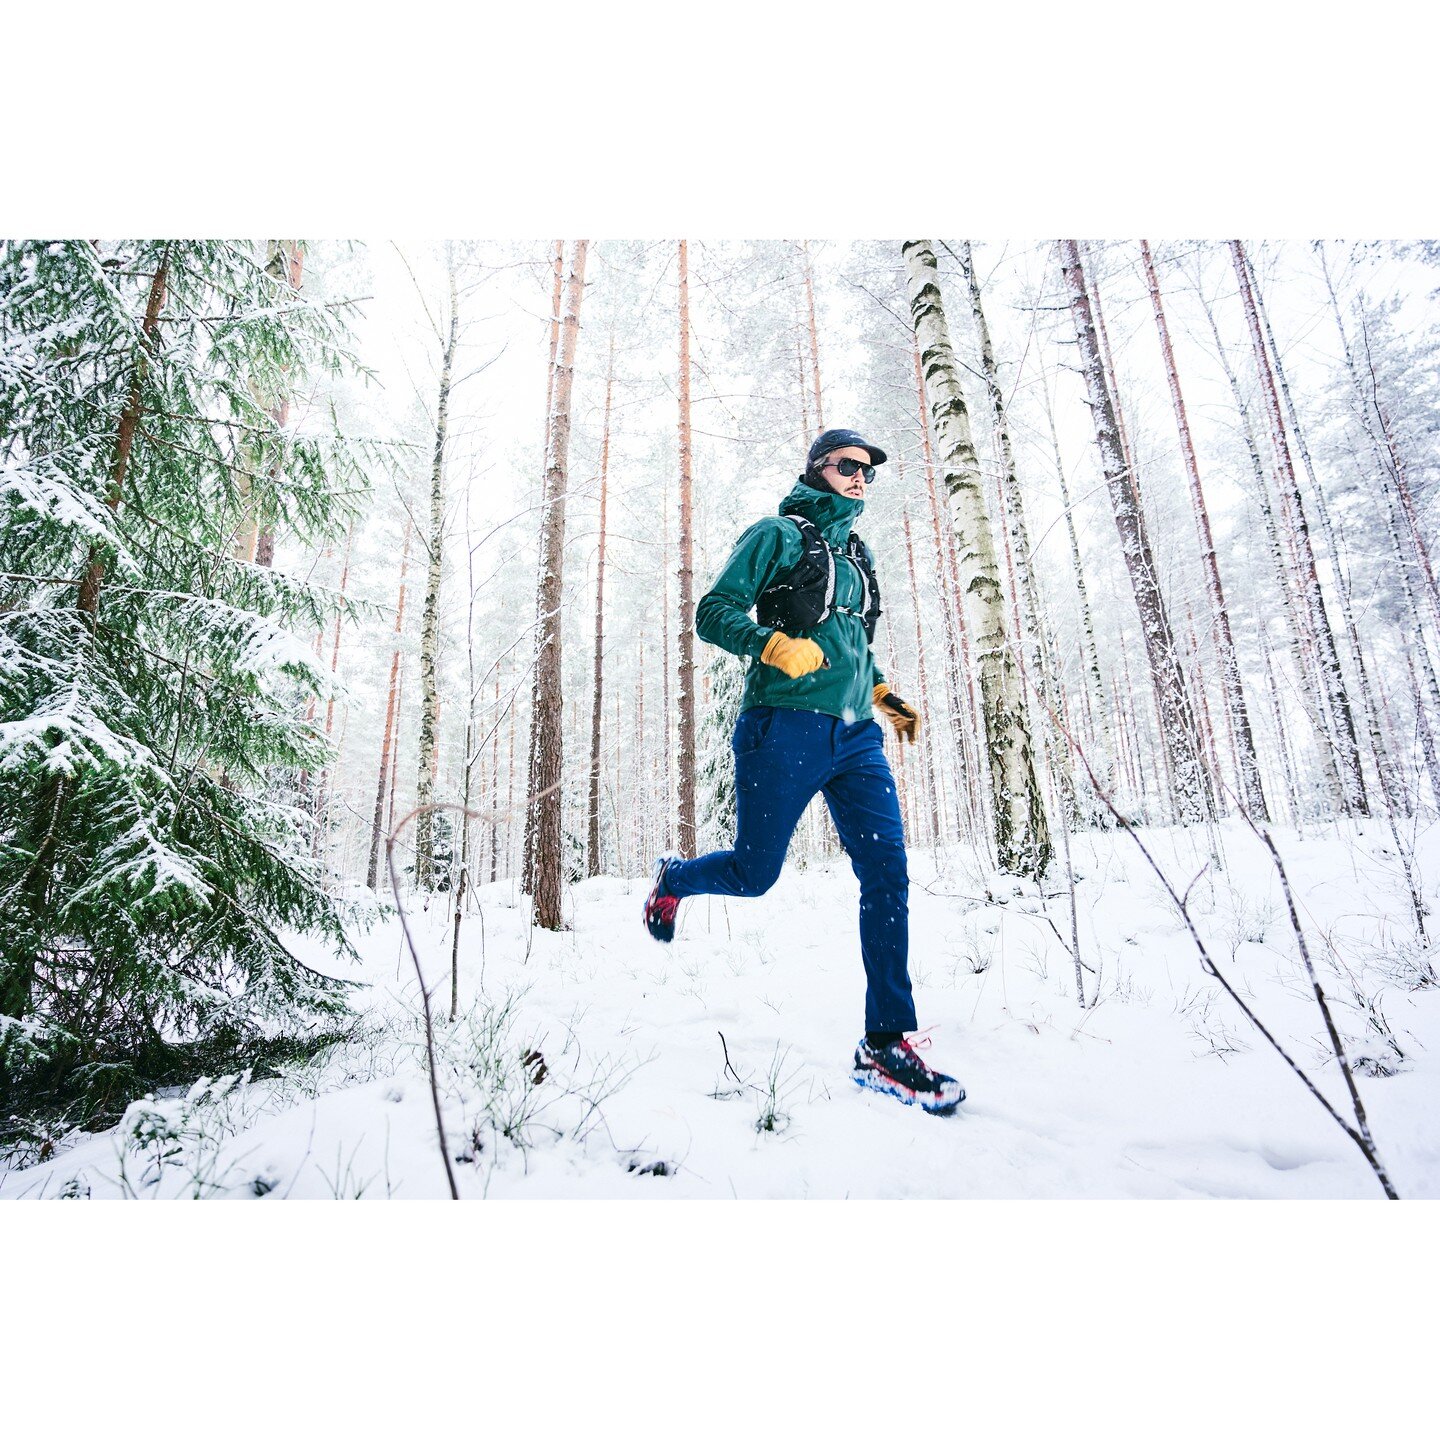 Welcome back snow! ⛄
-
#trailrunning #polkujuoksu #trailfi #trailrunninglife